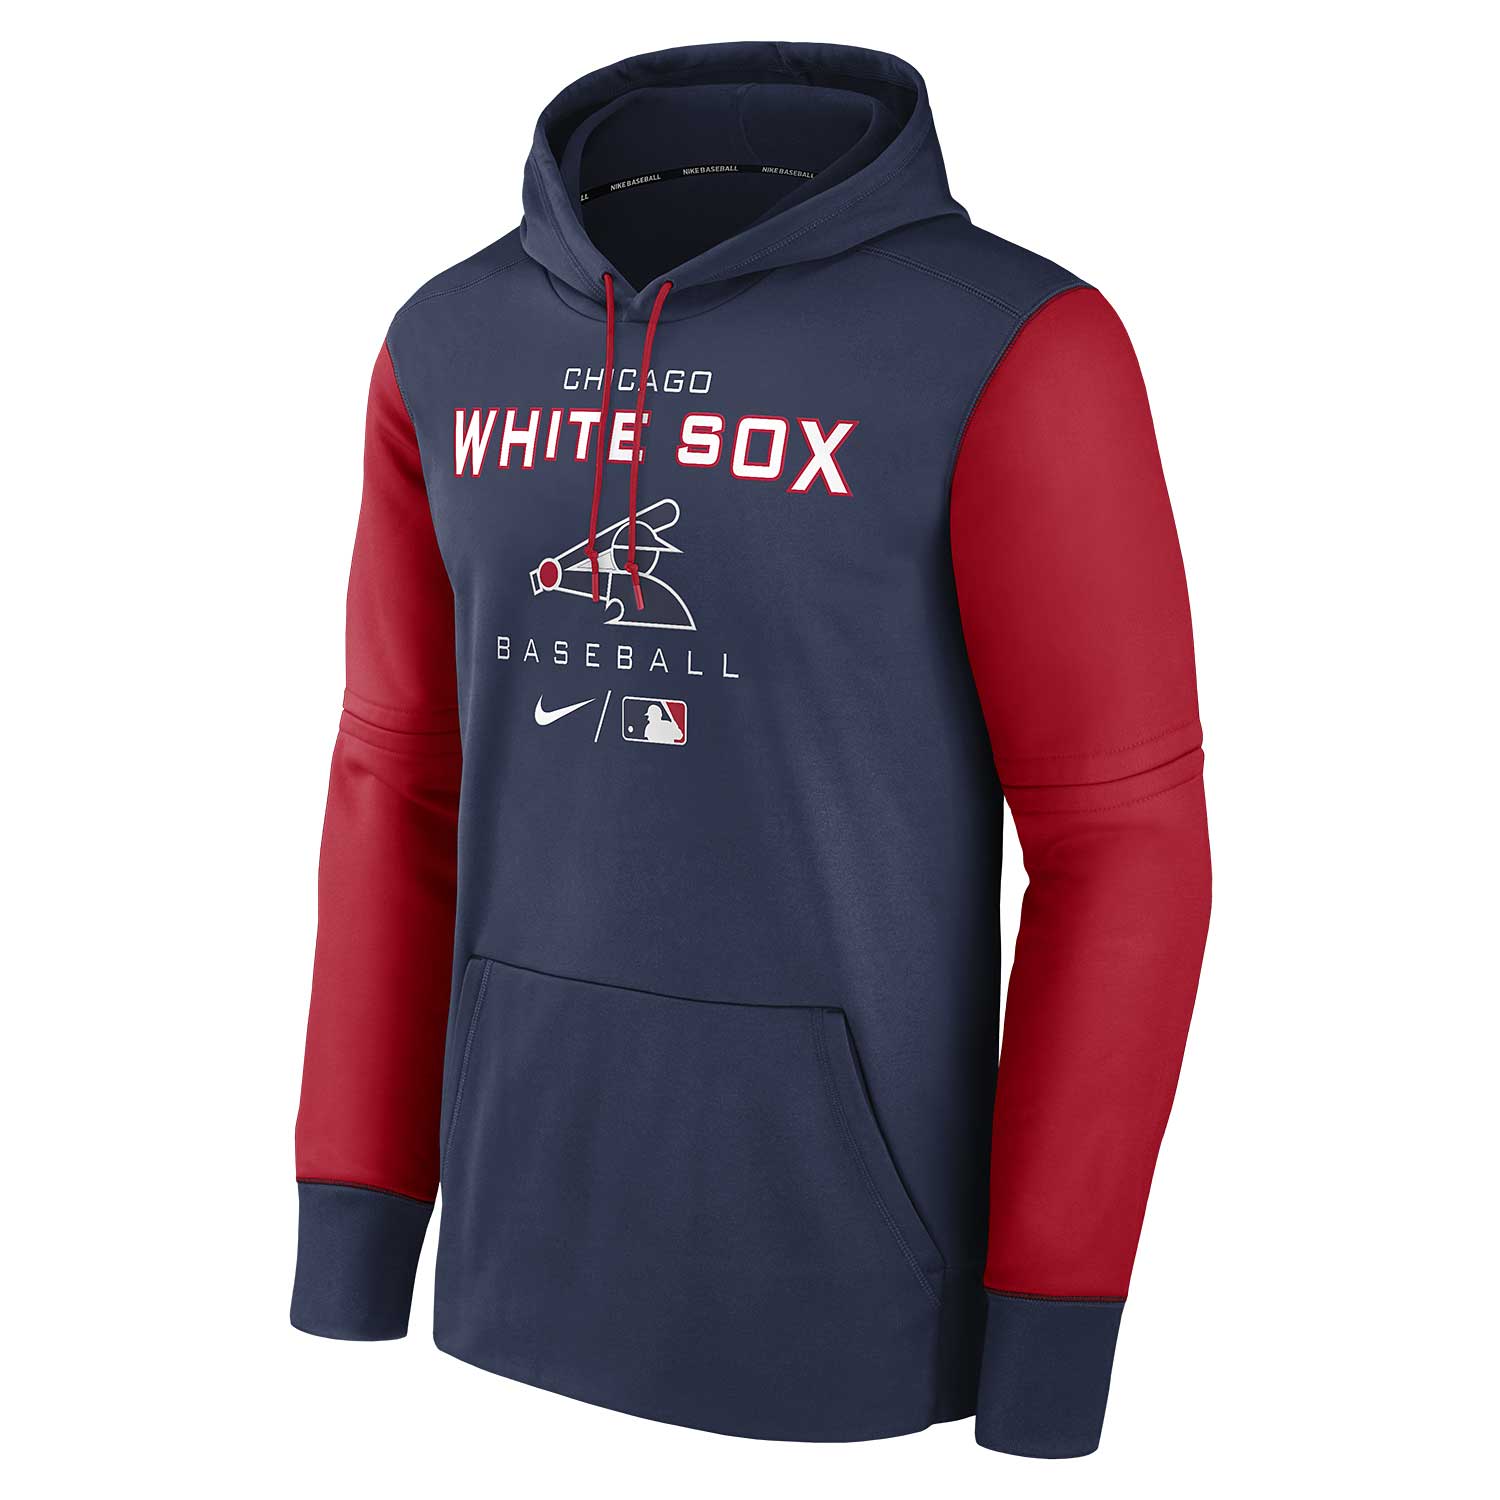 Chicago White Sox Mens Nike Replica Alternate Jersey - Black